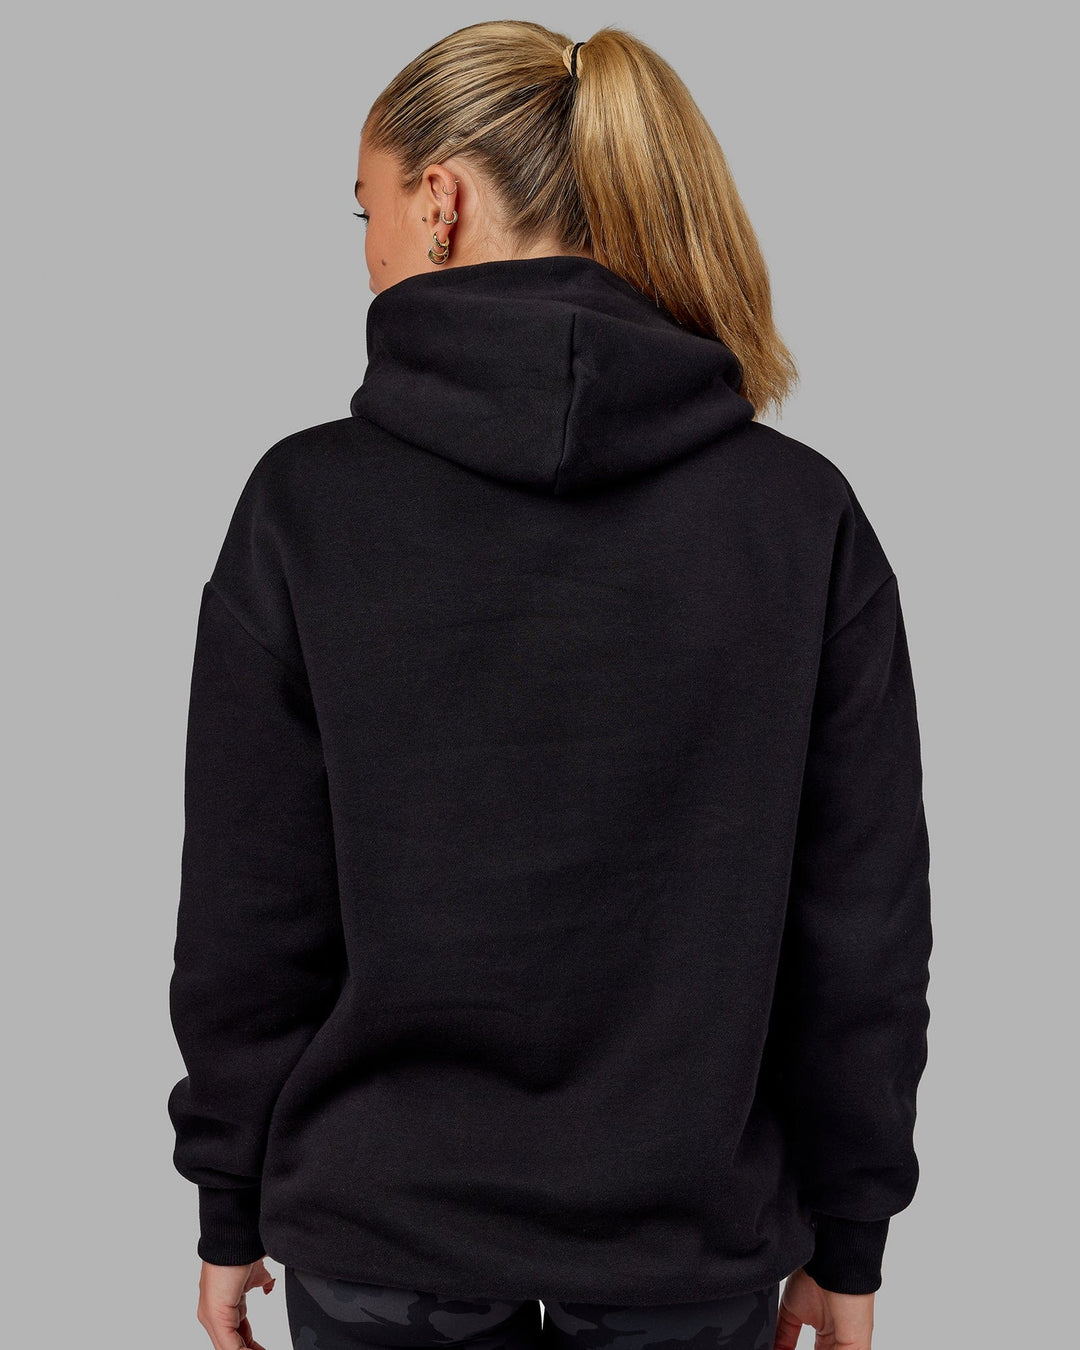 Woman wearing Unisex Fundamental Hoodie Oversize - Black